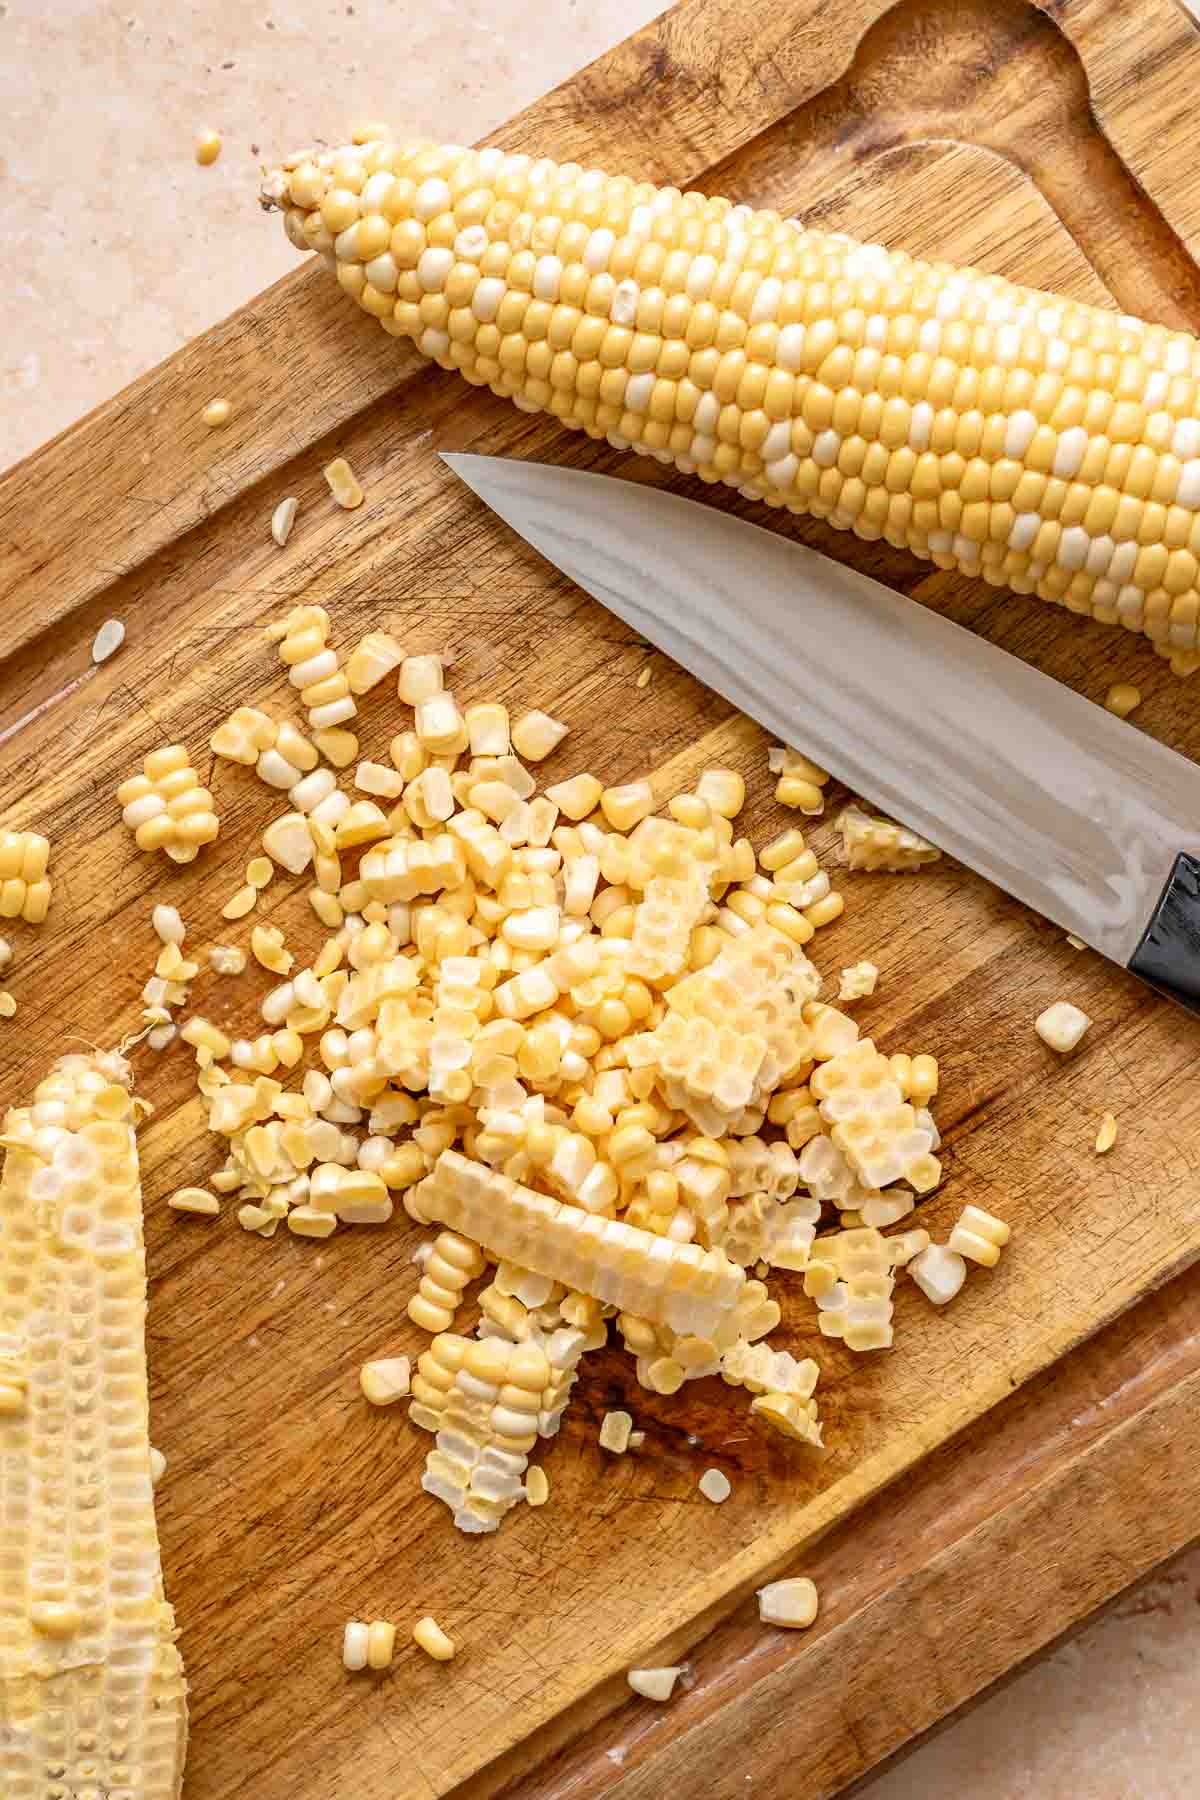 Corn sliced off the cob on a cutting board.